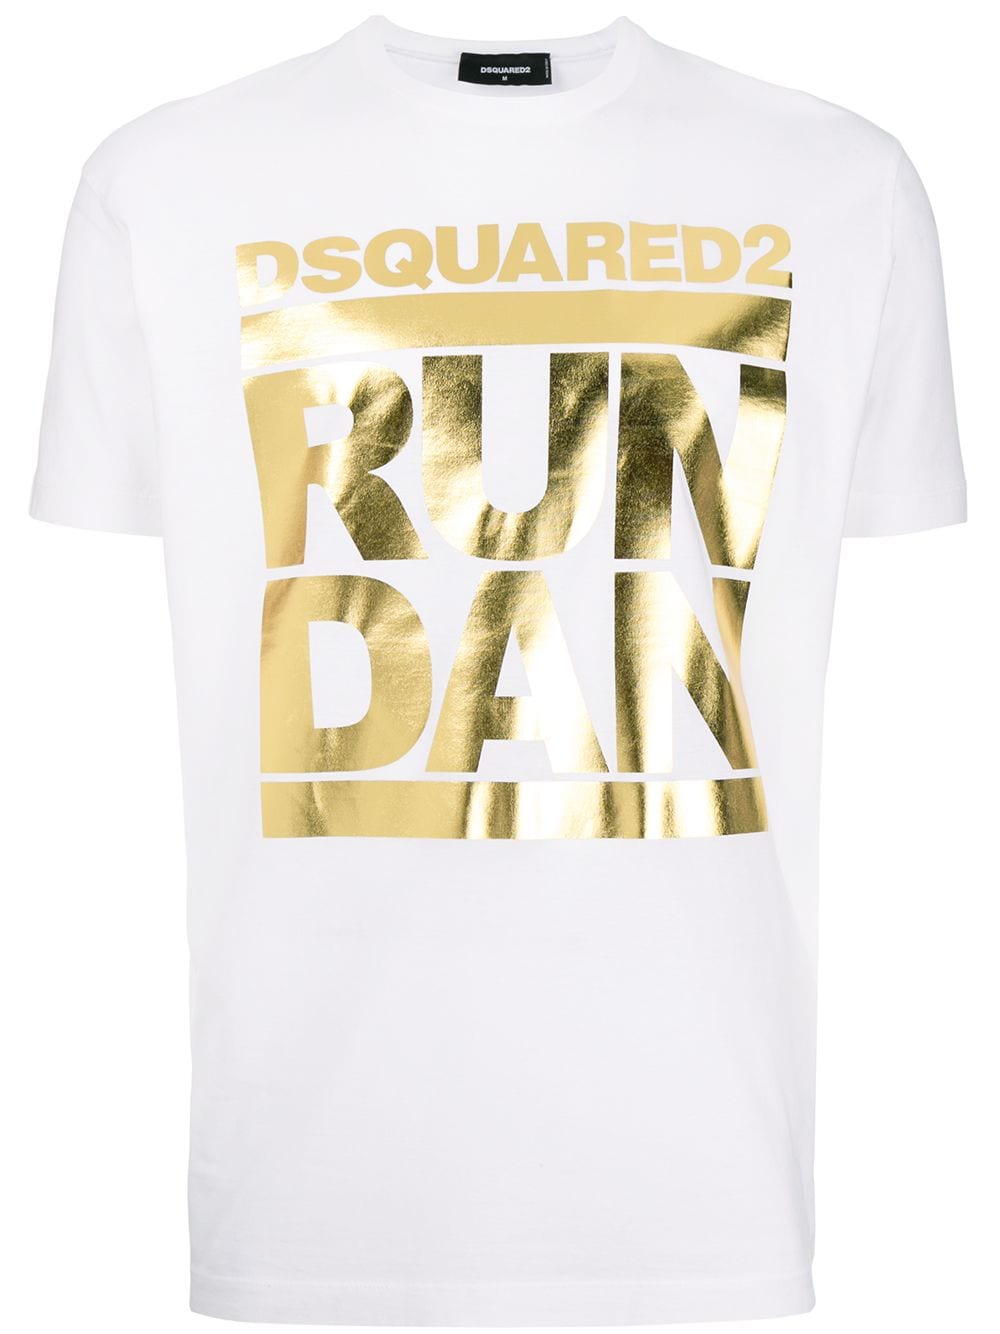 dsquared2 run dan t shirt